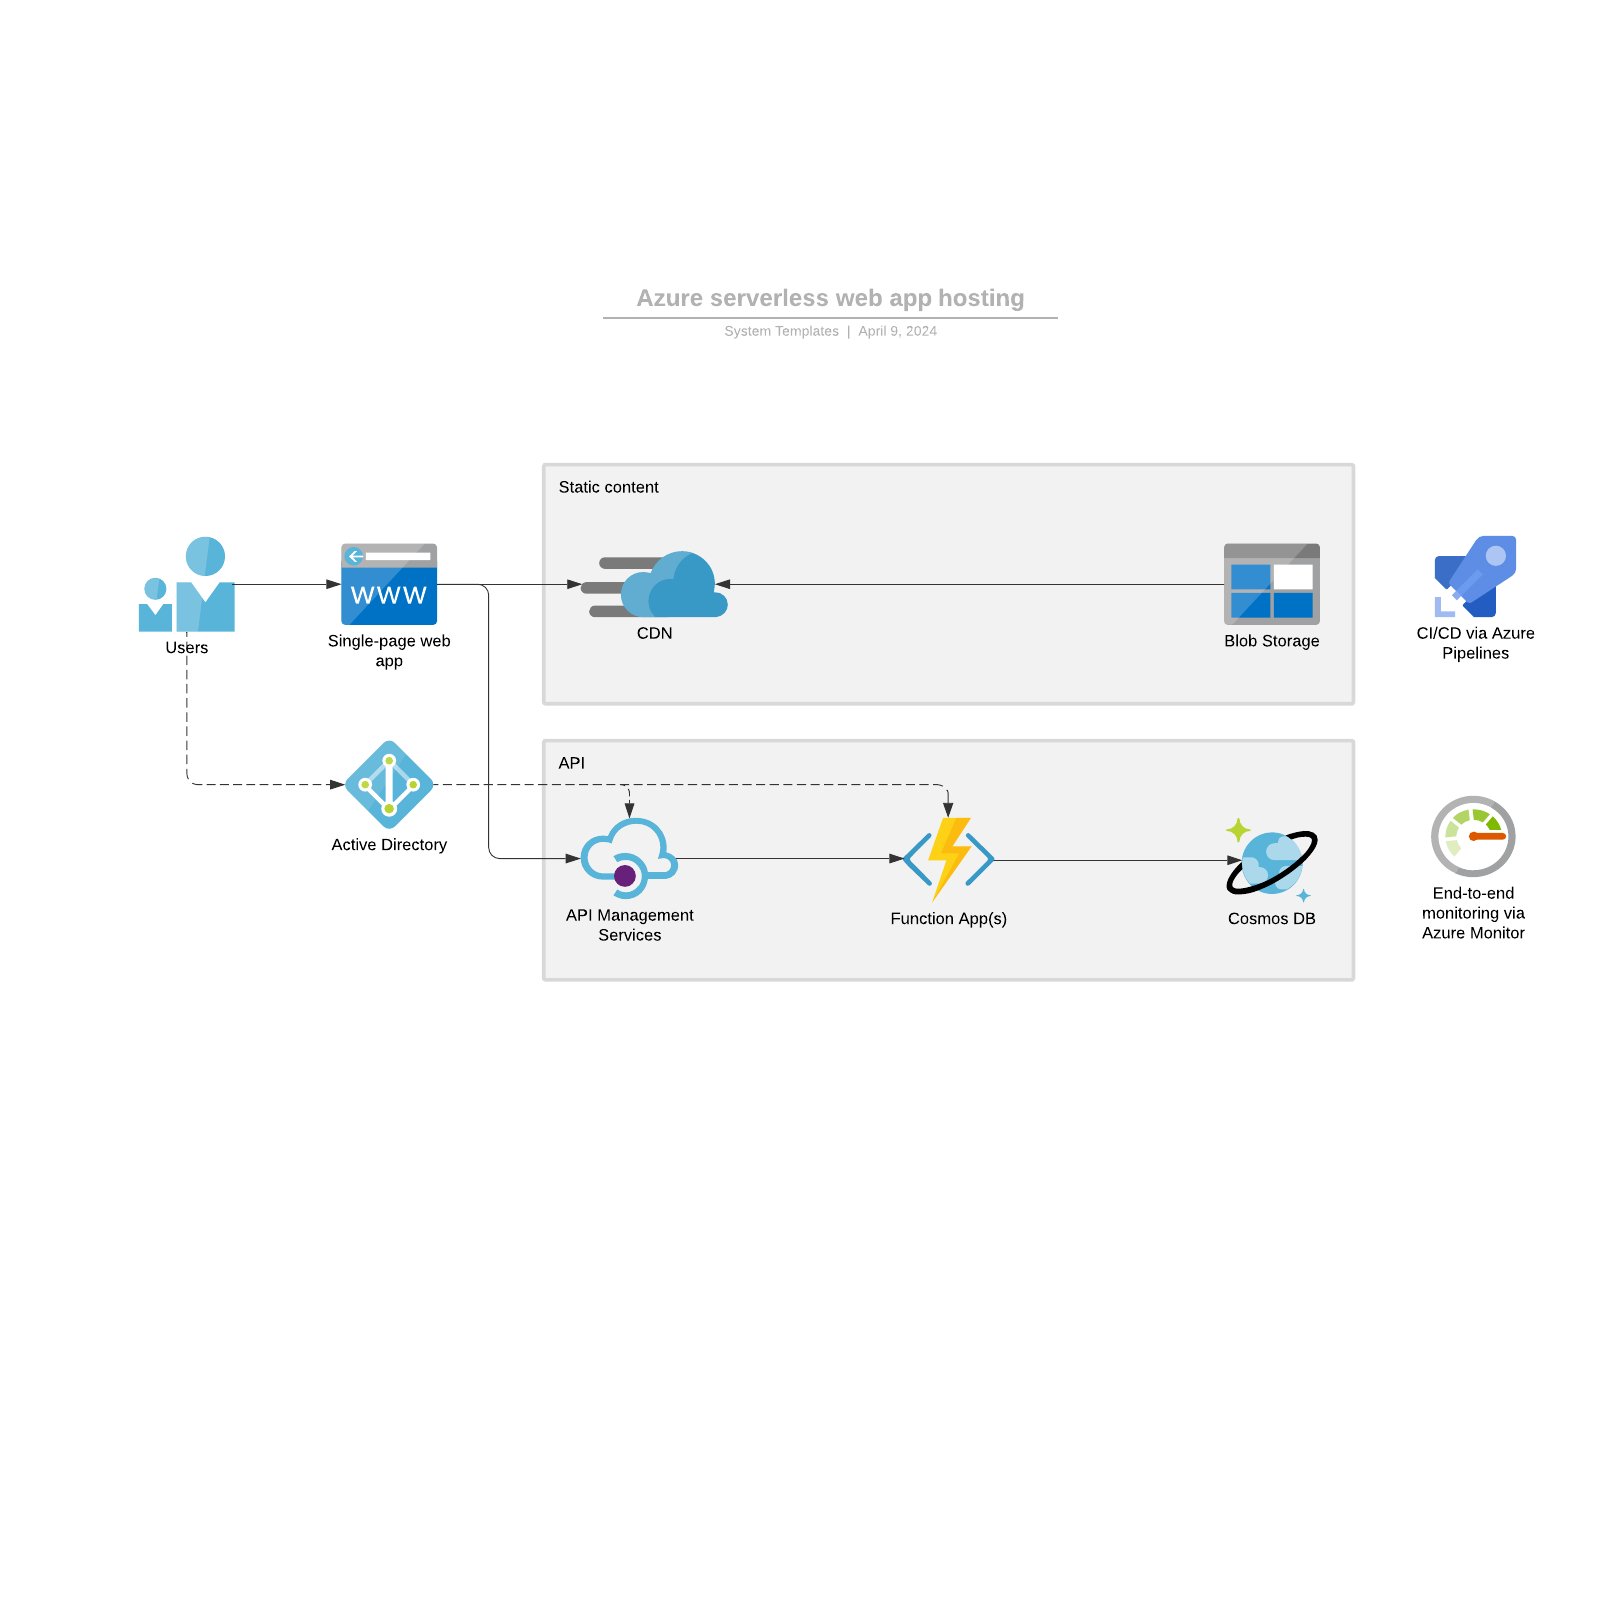 Azure serverless web app hosting example